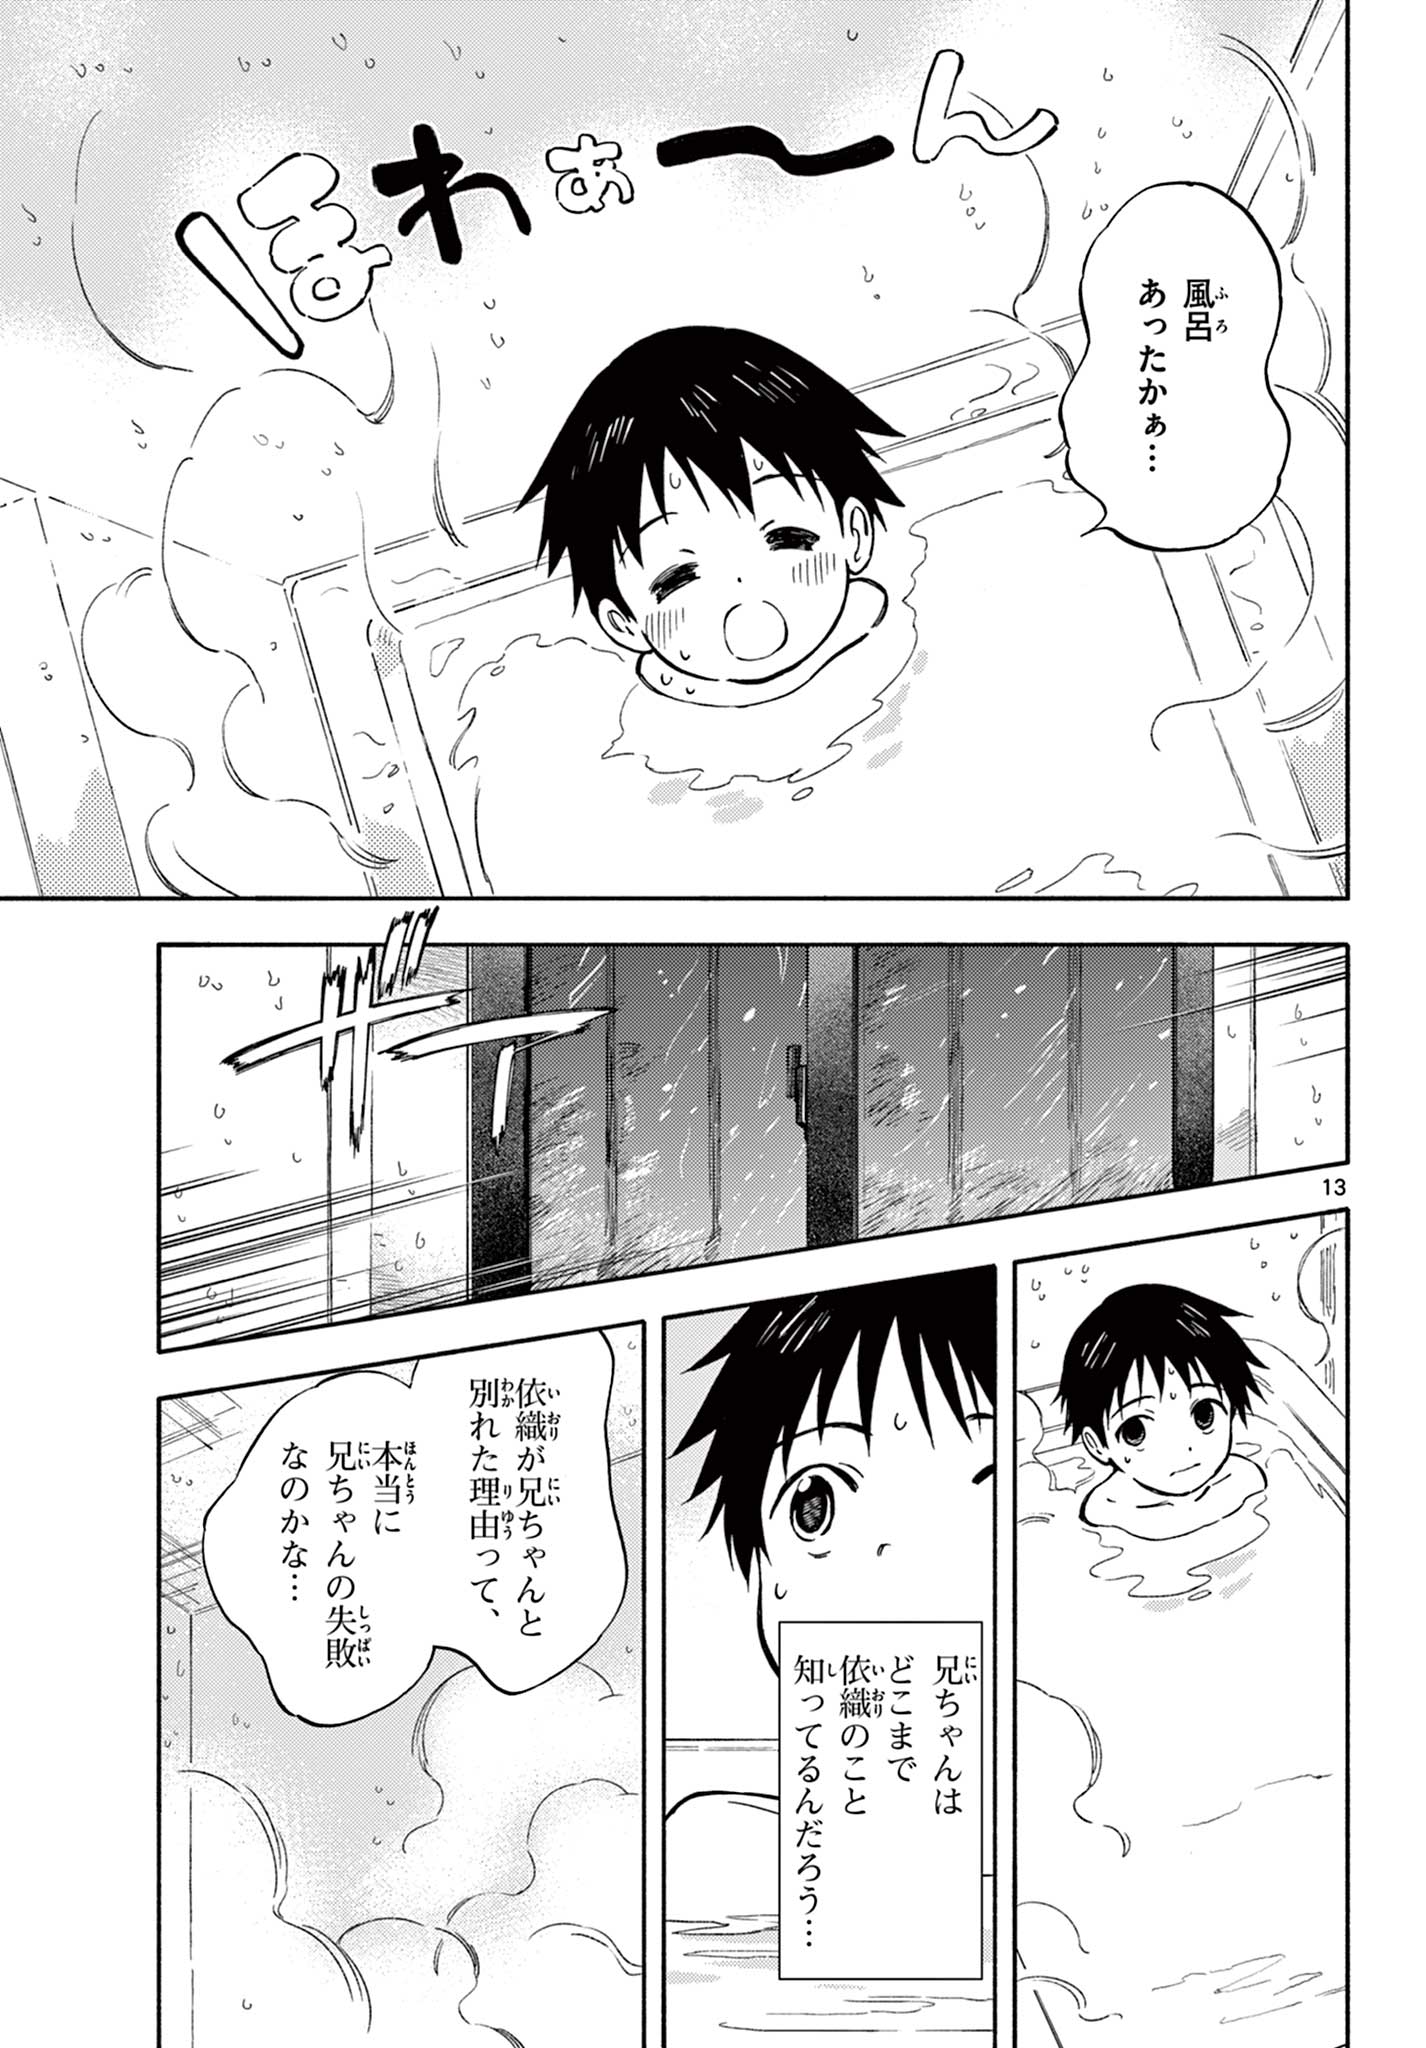 Nami no Shijima no Horizont - Chapter 13.1-2 - Page 1